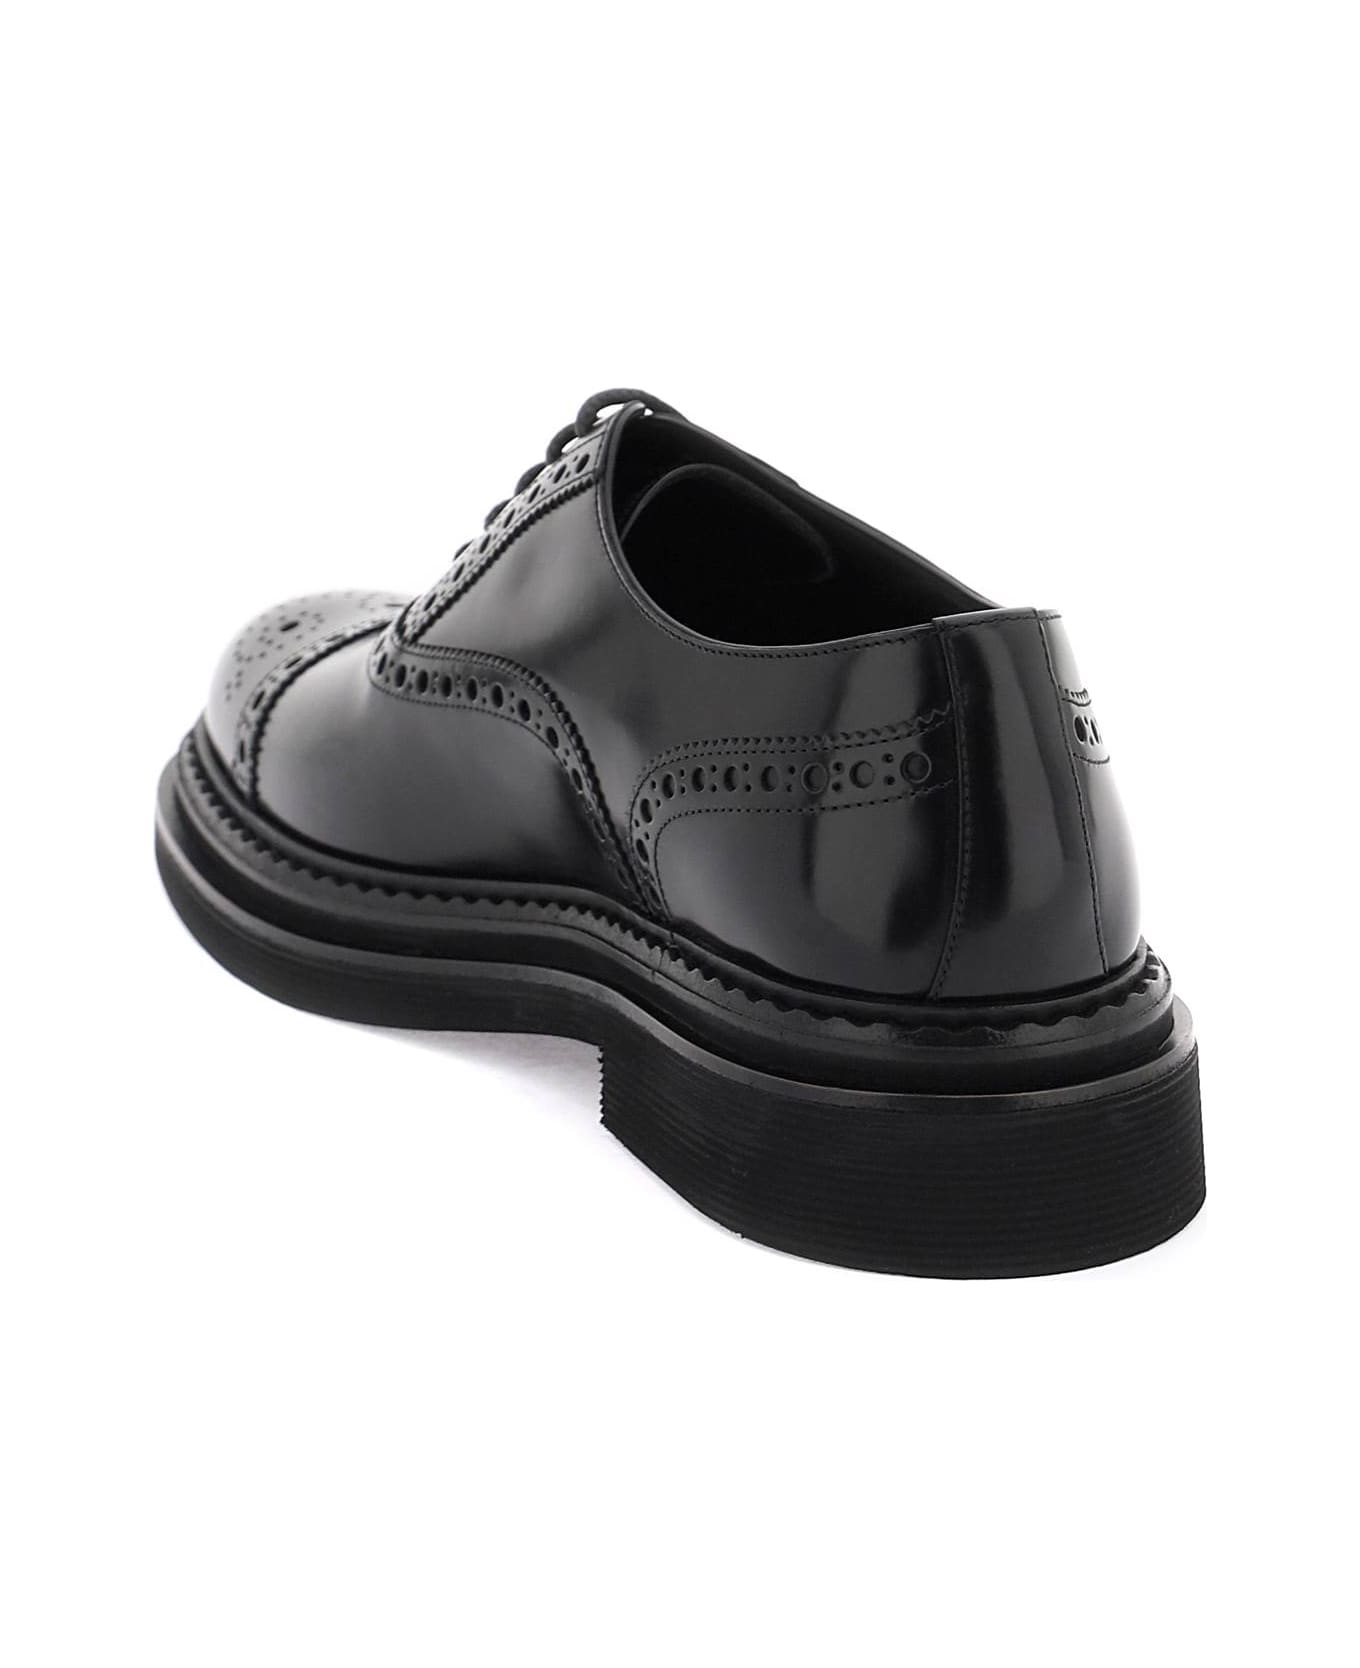 Dolce & Gabbana Leather Lace Up Teva Shoes - Black